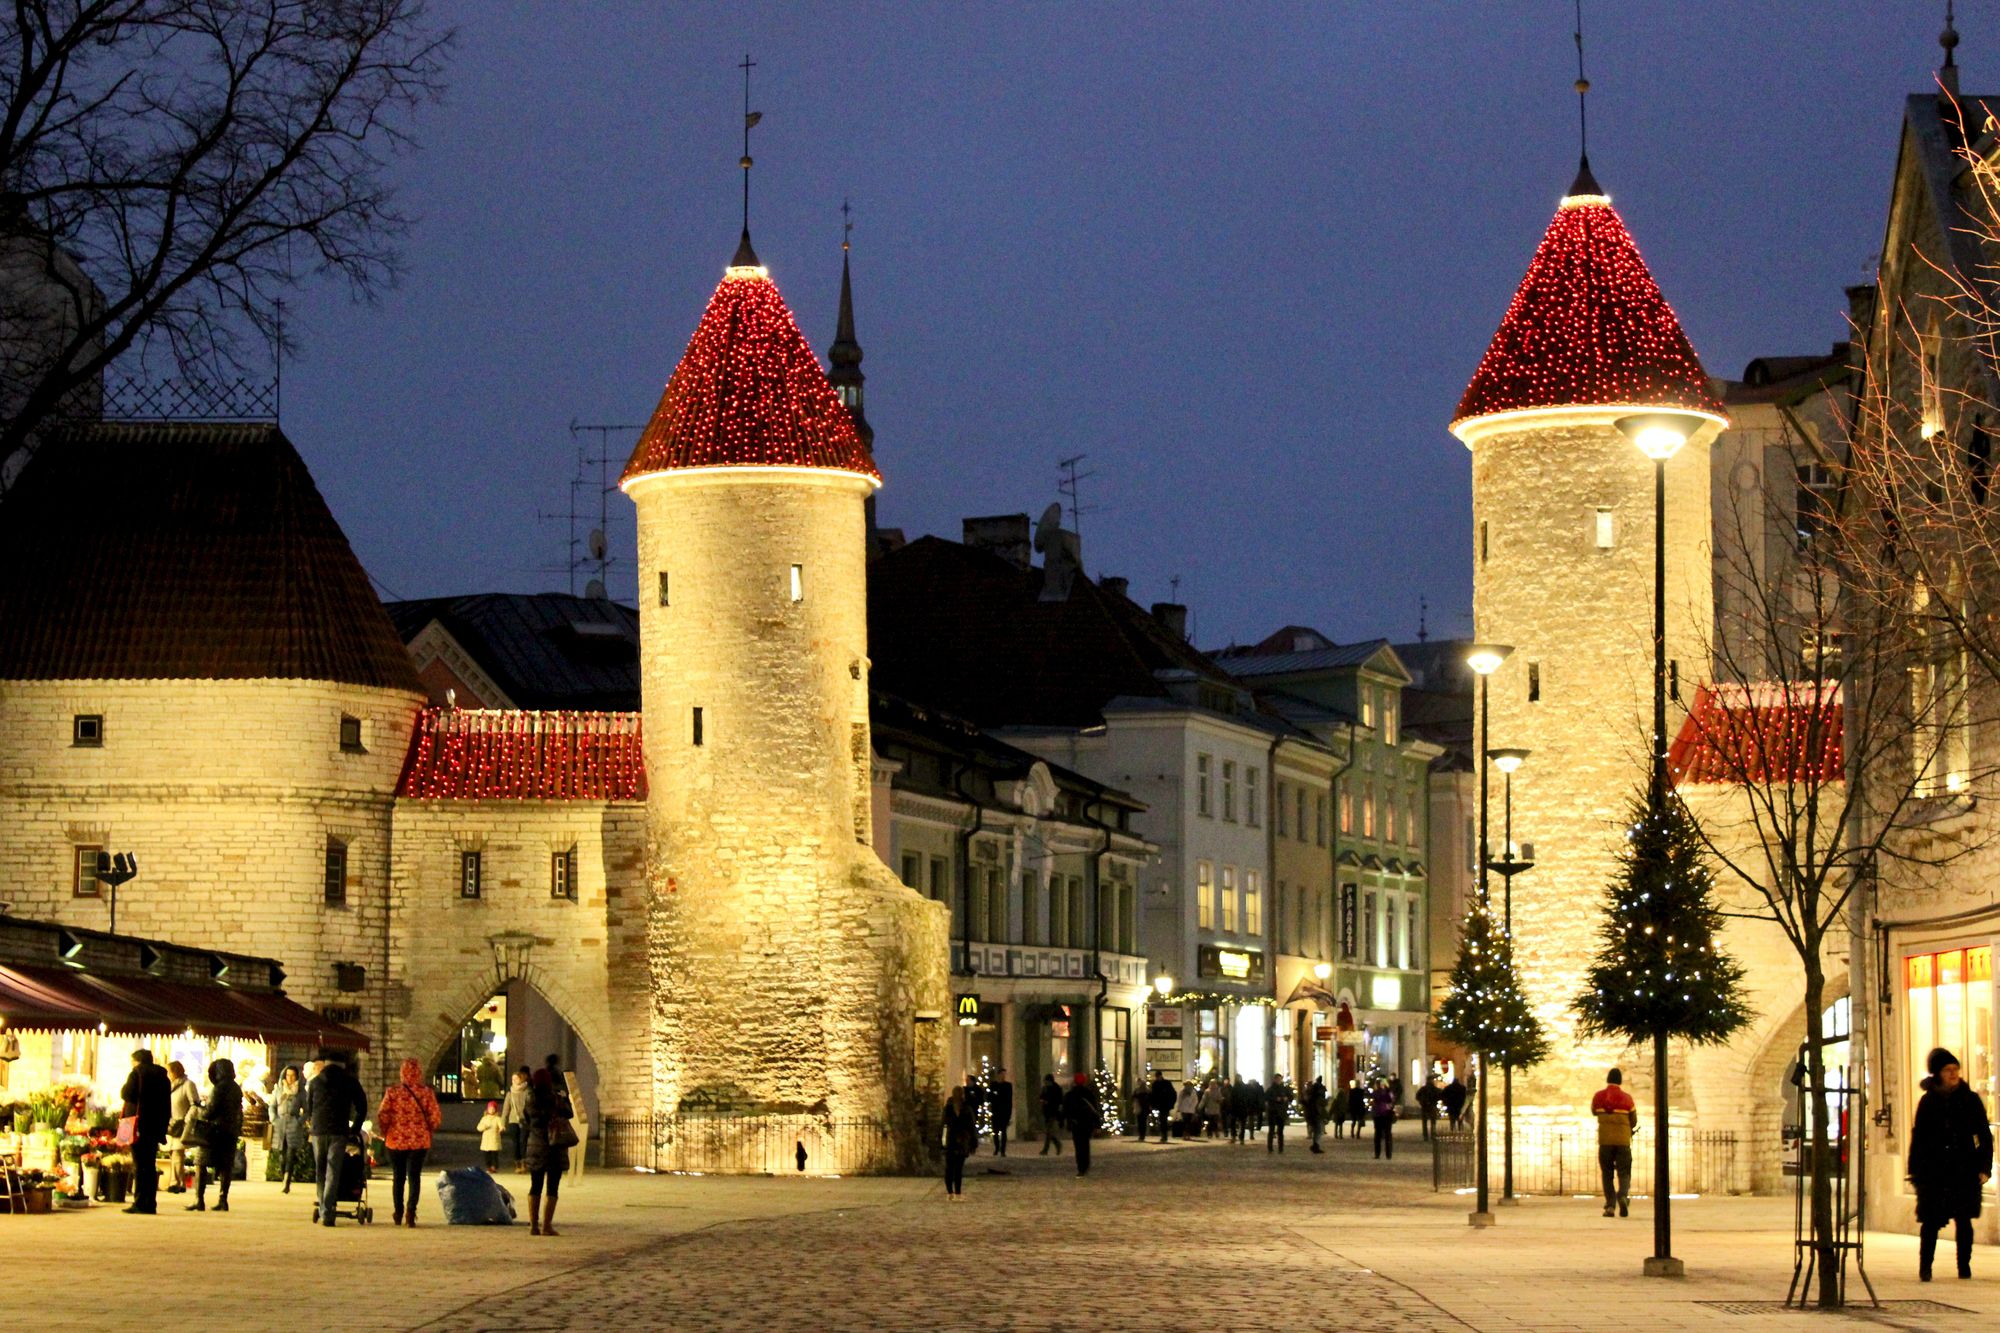 The city at night in Estonia